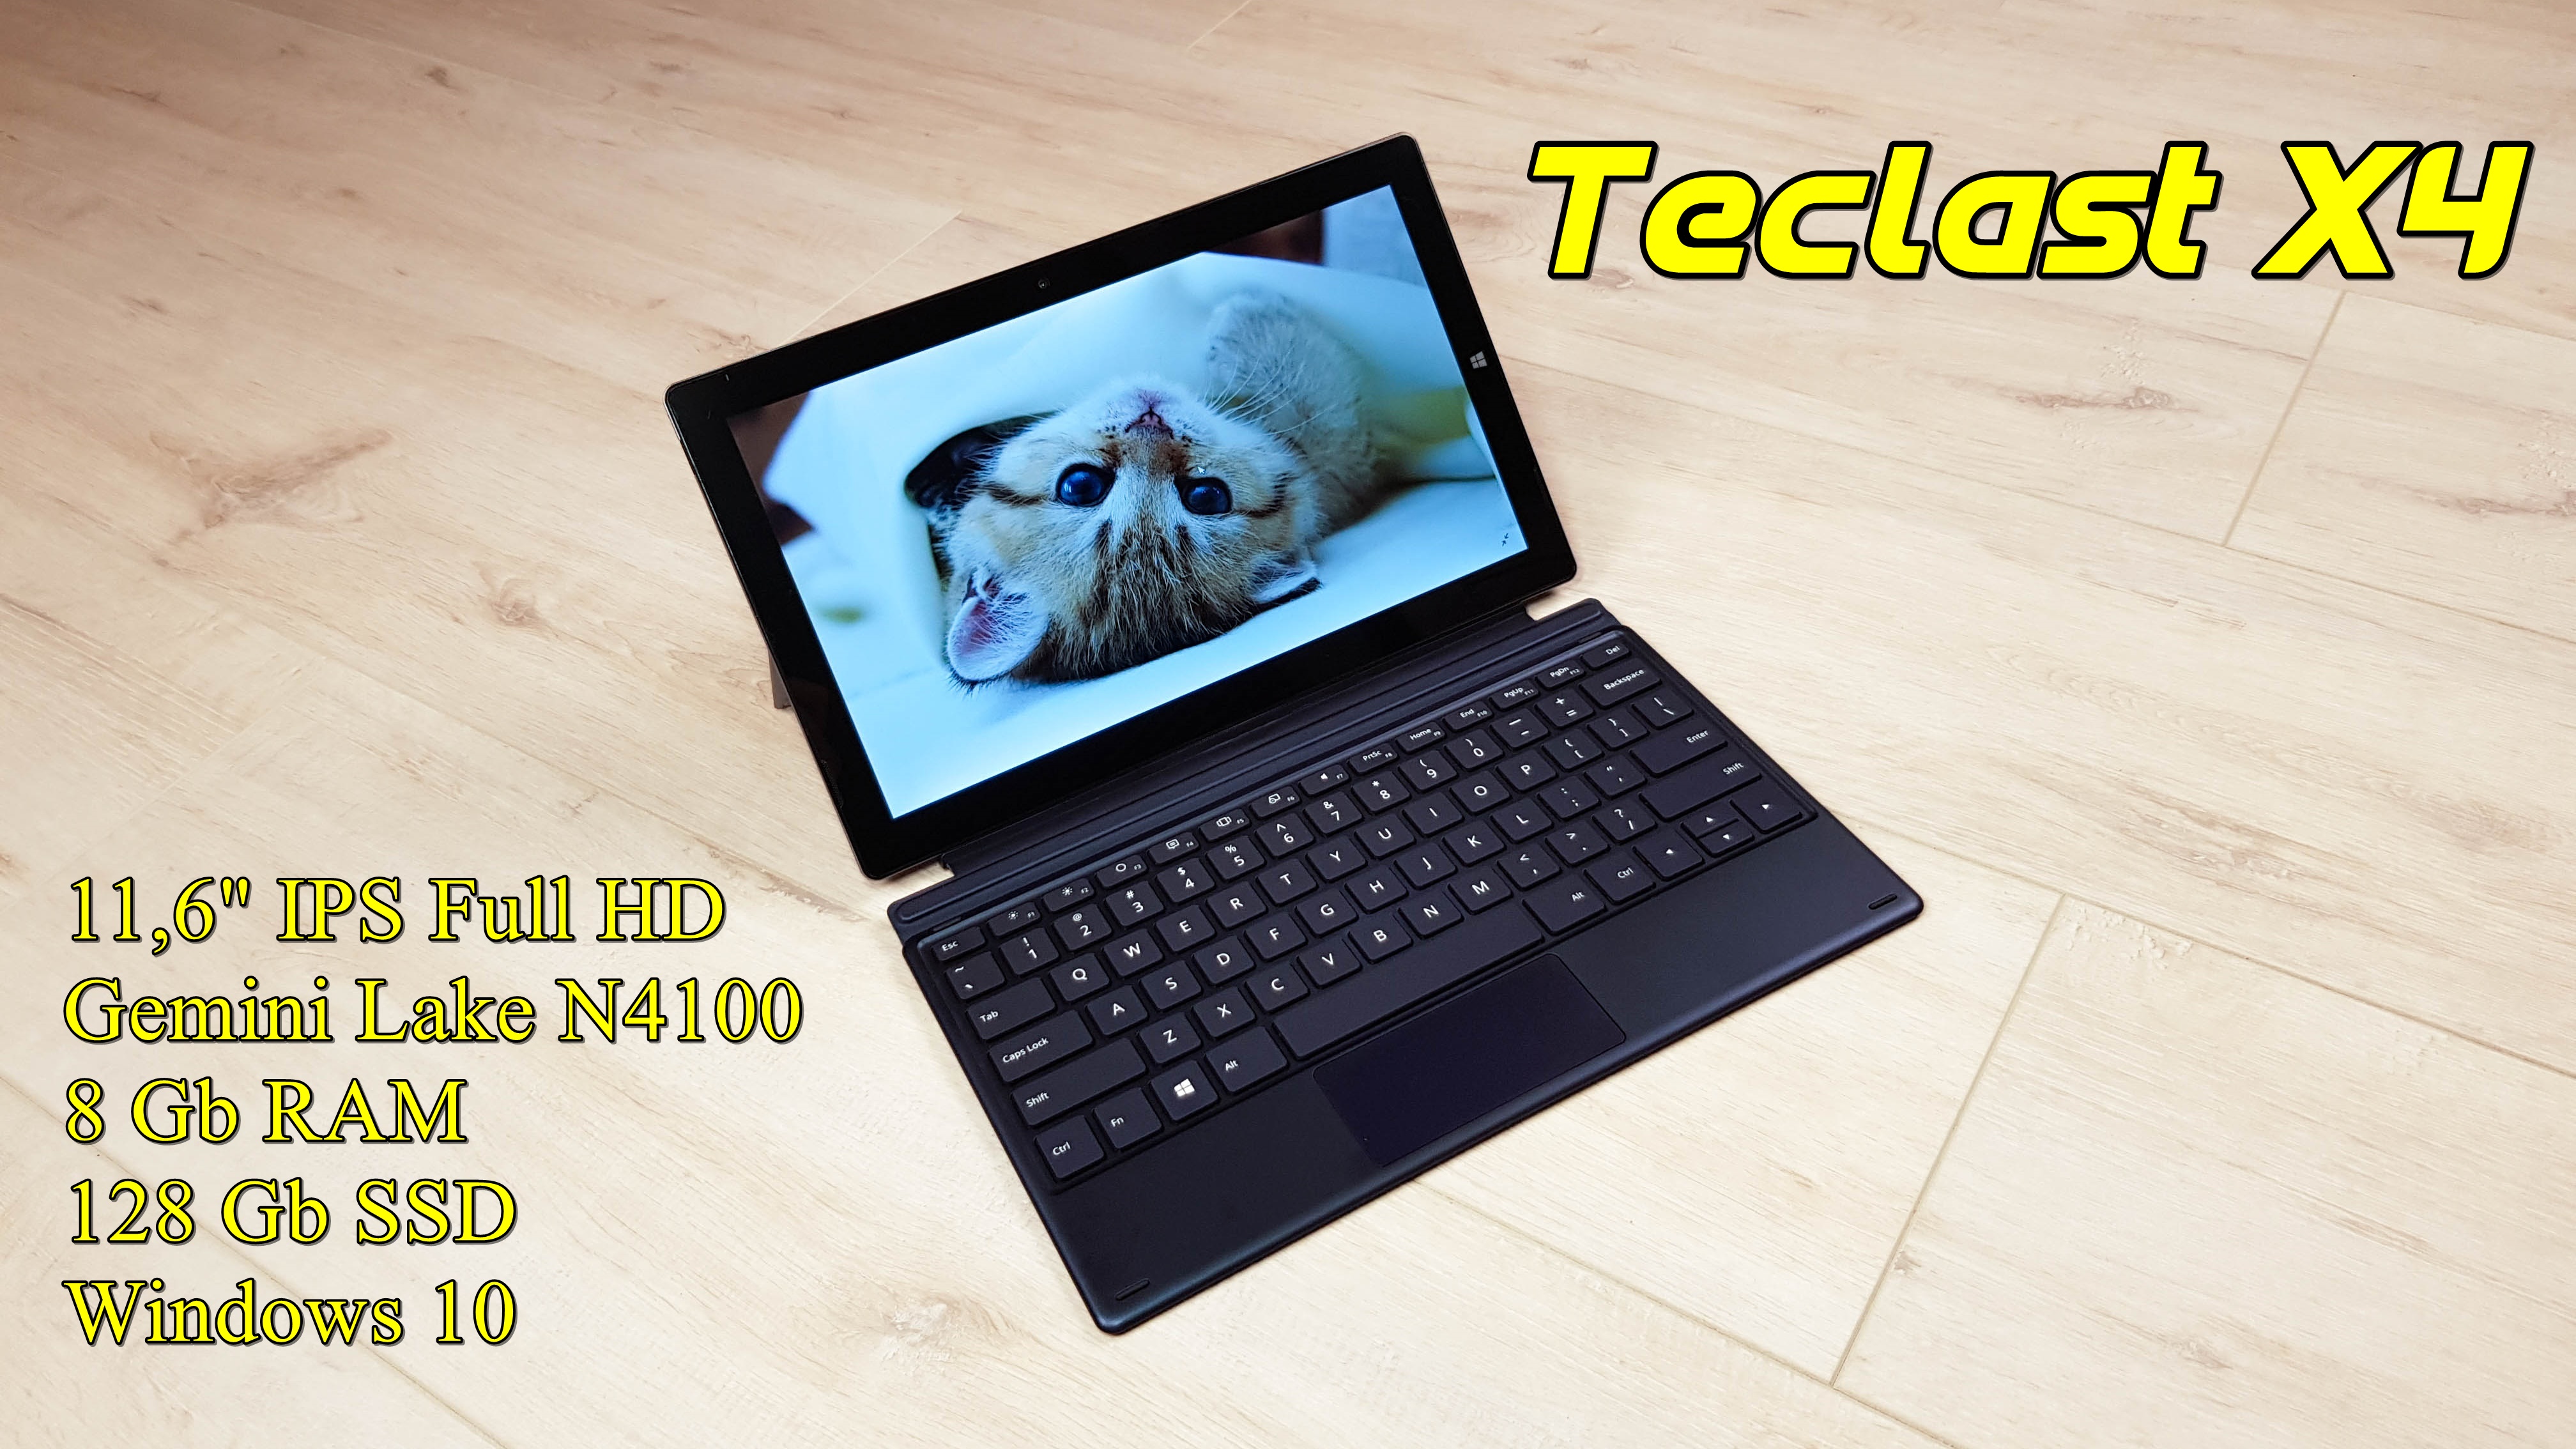 Teclast X4: обзор мощного планшетного ПК на Gemini Lake с подключаемой клавиатурой, 8 ГБ оперативной памяти и SSD